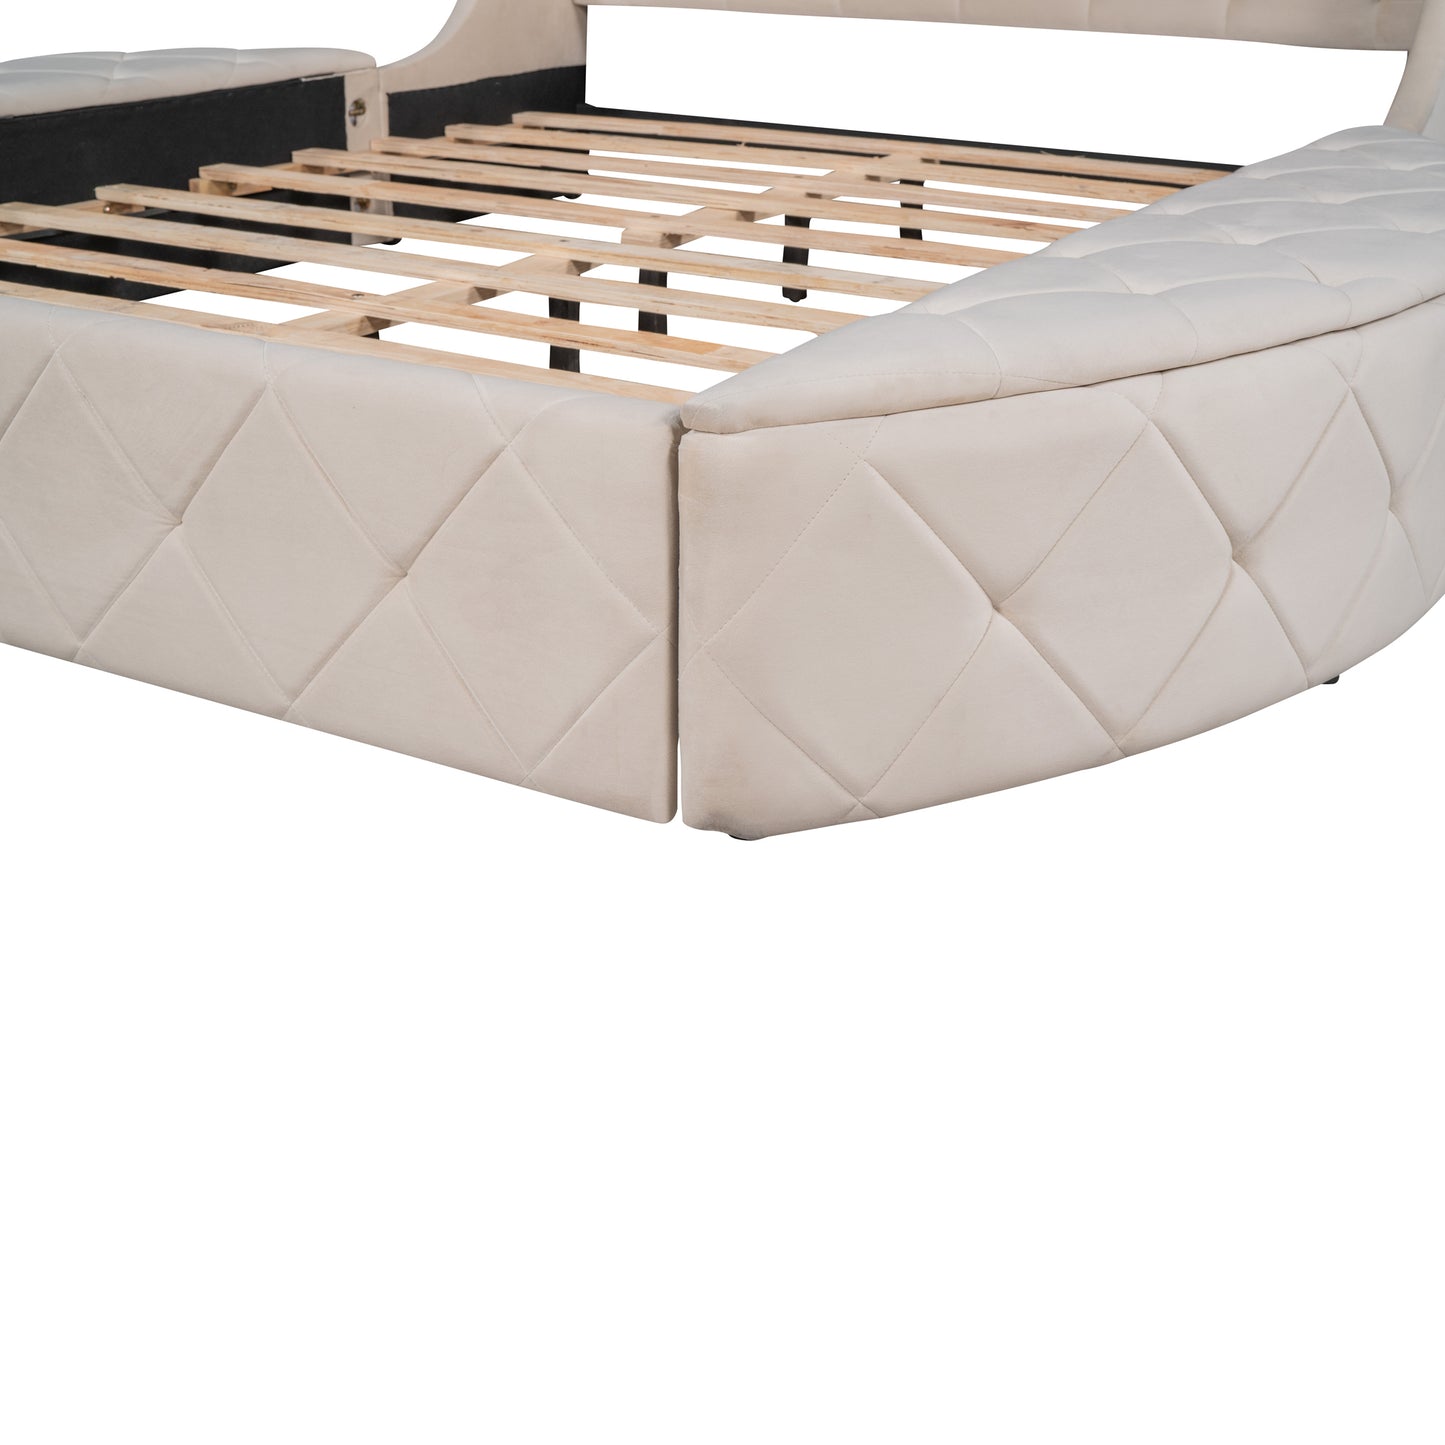 Upholstered Platform Bed Queen Size Storage Velvet Bed with Wingback Headboard and 1 Big Drawer,2 Side Storage Stool(Beige)